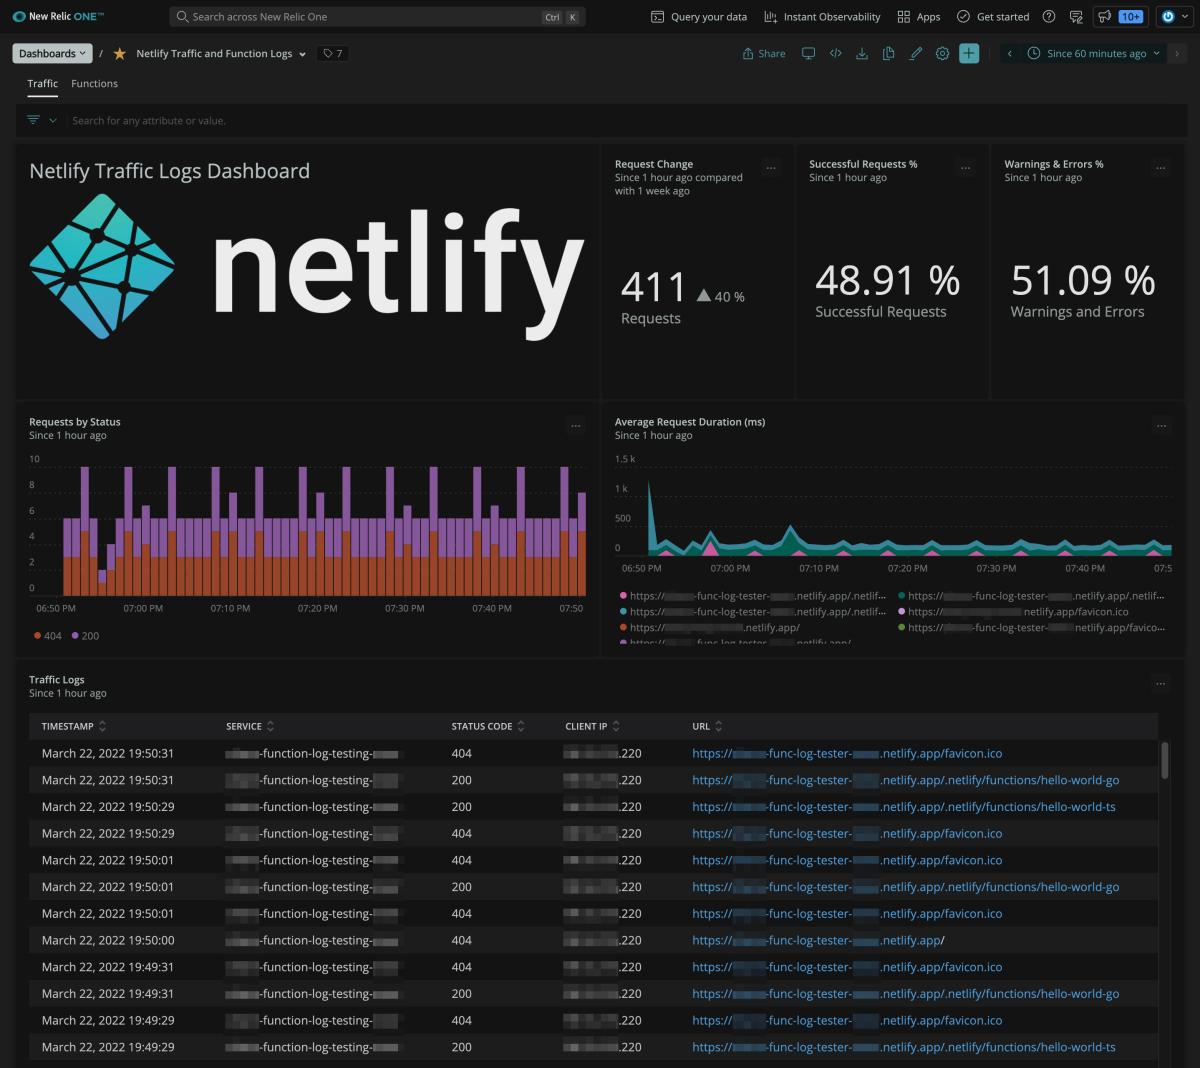 Dashboard shows Netlify's traffic logs